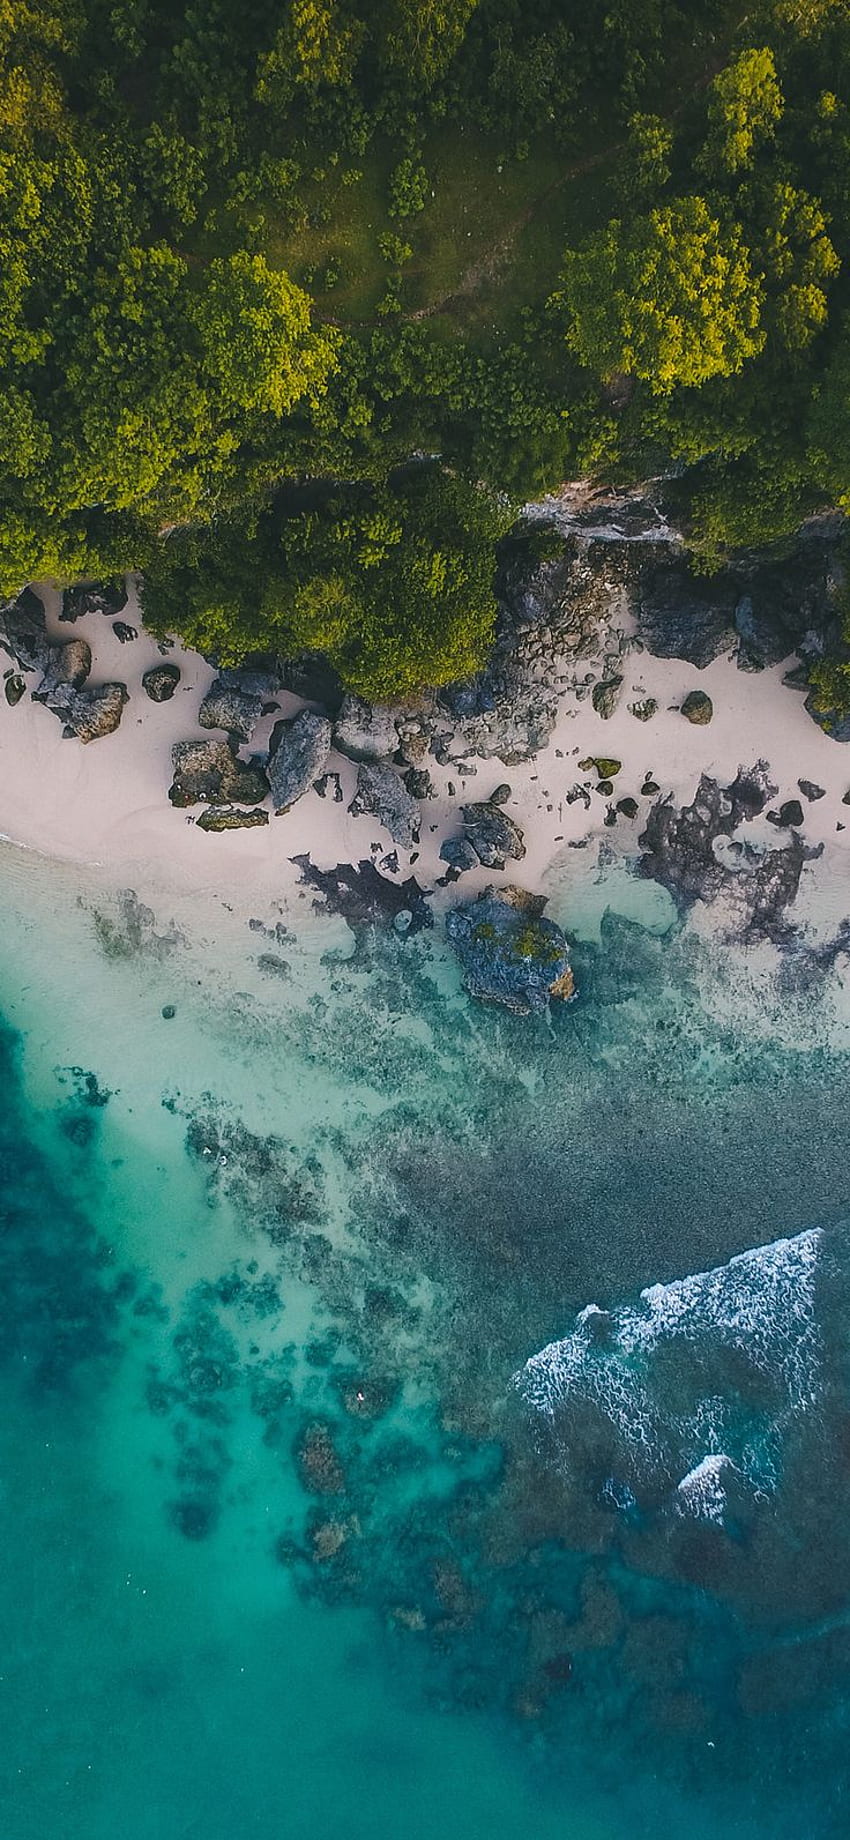 iPhone X : アース ビュー グリーン 海 山 木 自然 経由。 マガジン 世界中の最高のあなたの毎日の情報源 HD電話の壁紙